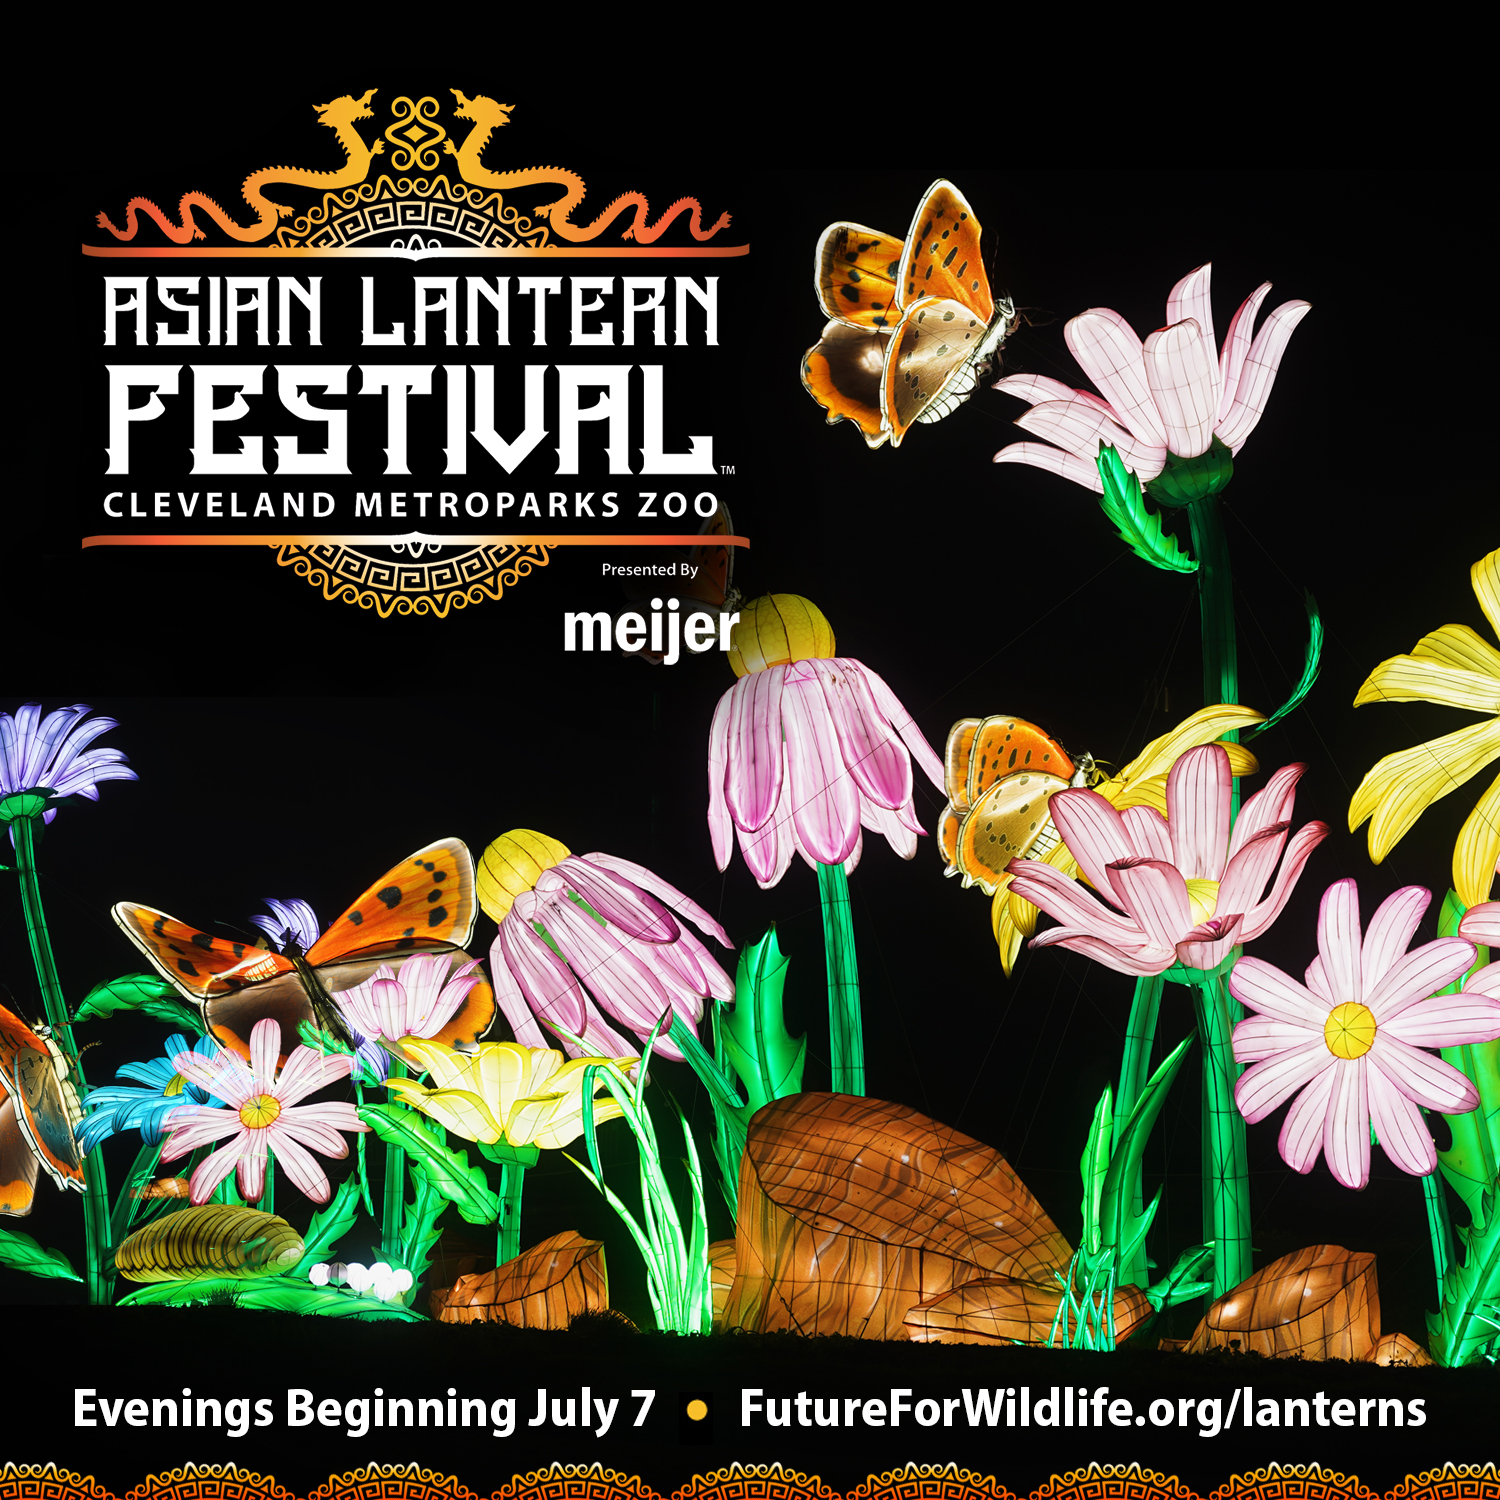 Cleveland Metroparks Zoo’s Asian Lantern Festival presented by Meijer